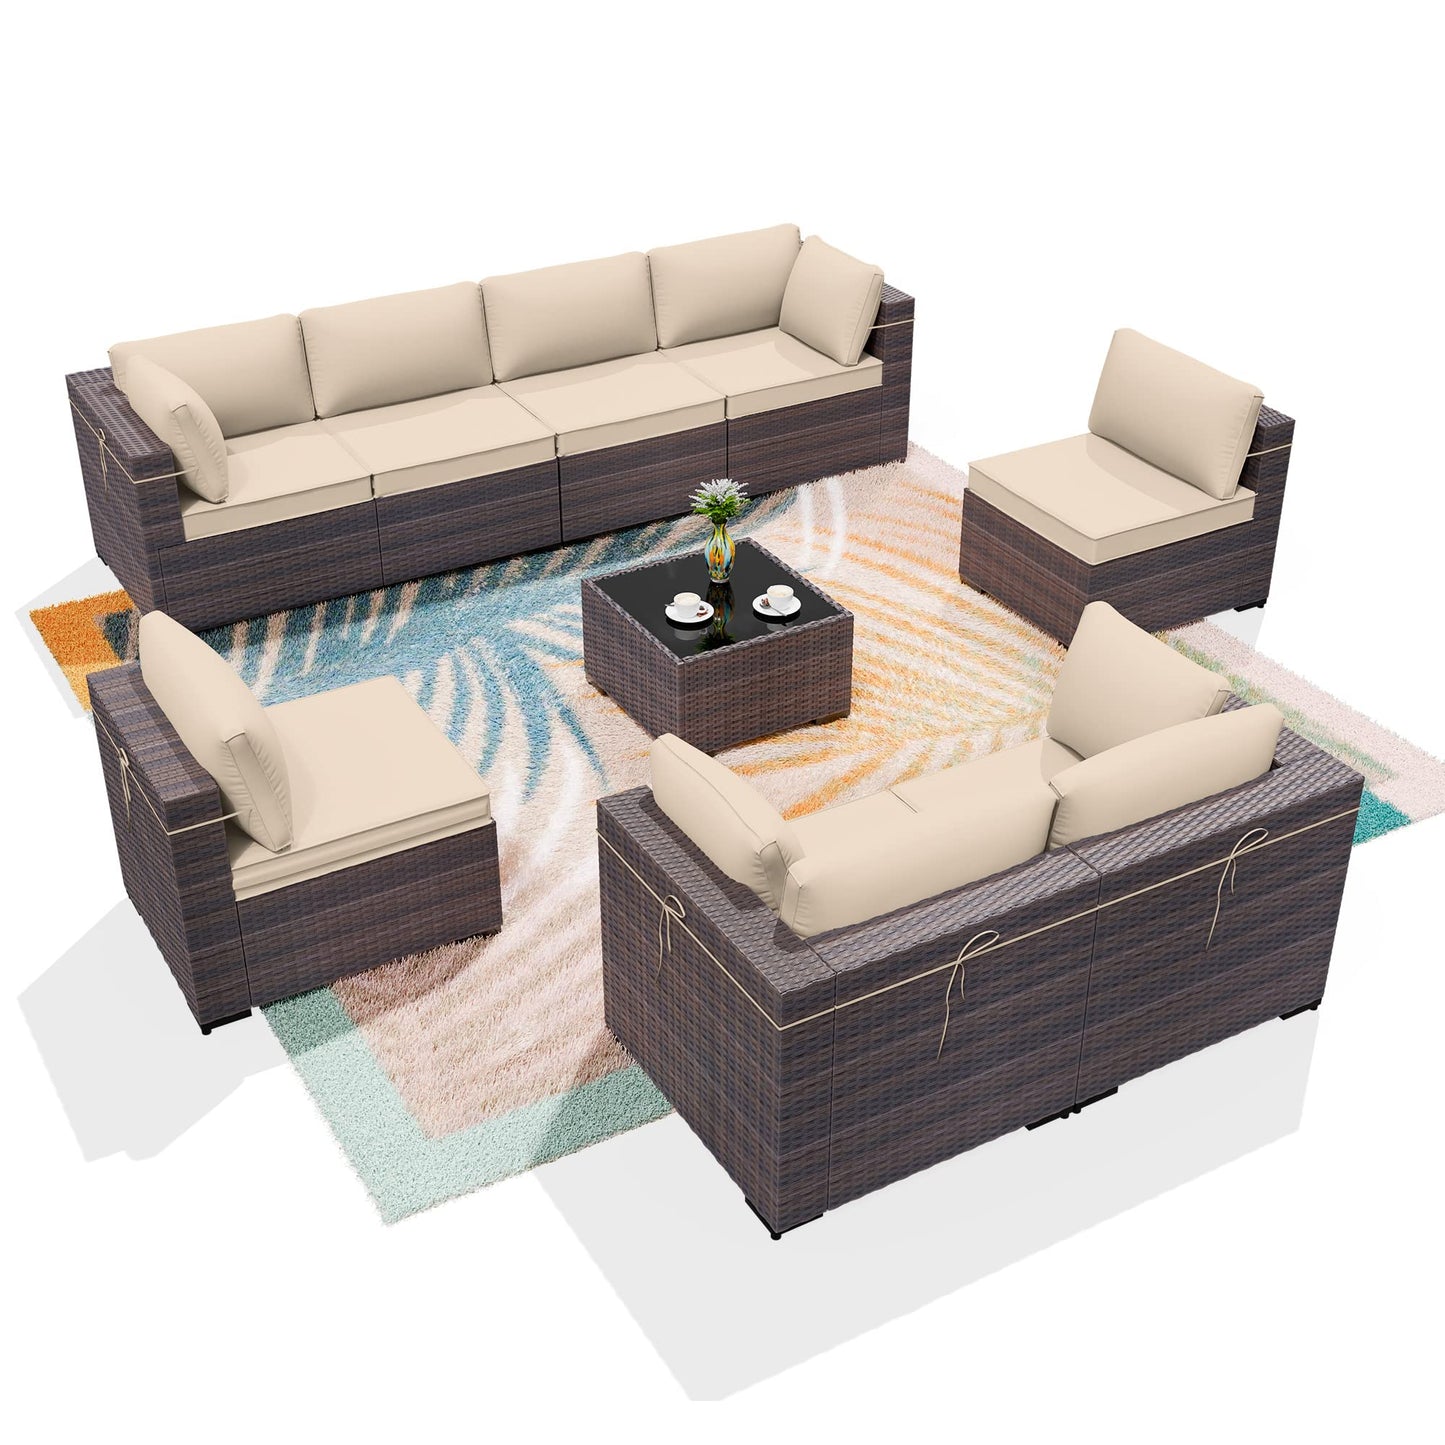 ALAULM 9 Pieces Sectional Sofa Sets, Outdoor Patio Furniture Set - Sand